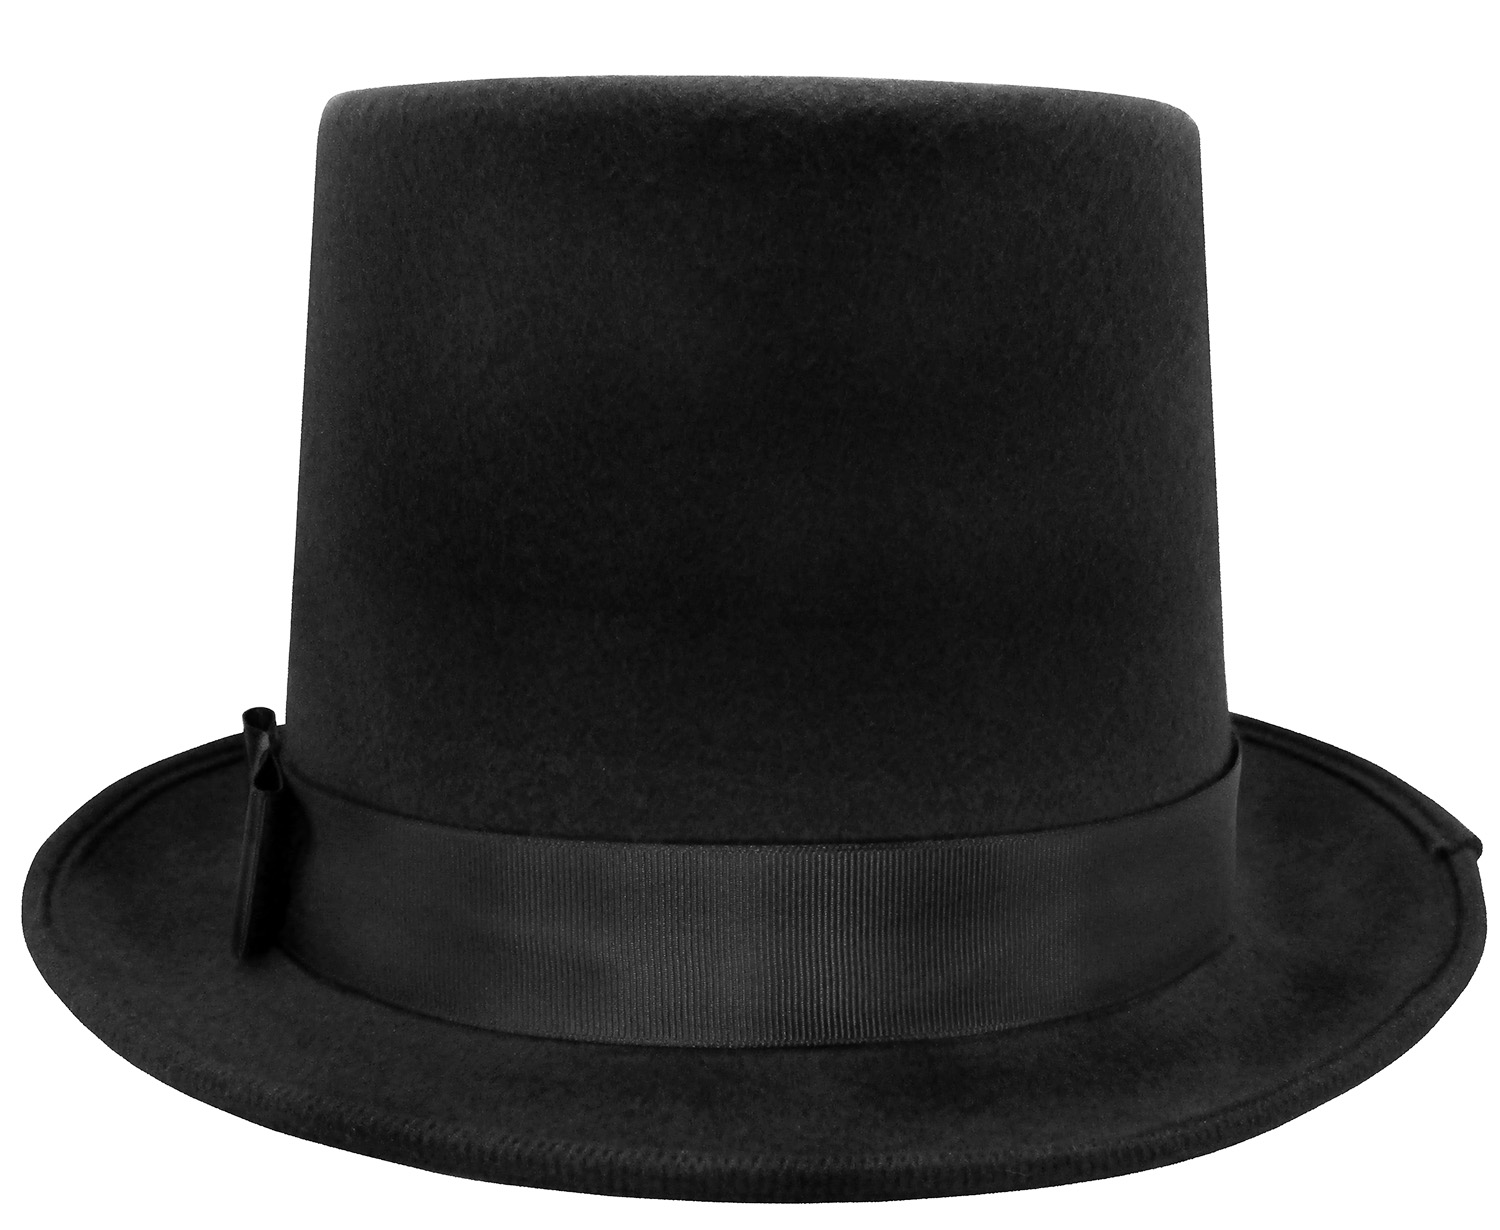 Mens Tuxedo Victorian Steampunk Black Costume Top Hat Deluxe Felt High Wool Hat 